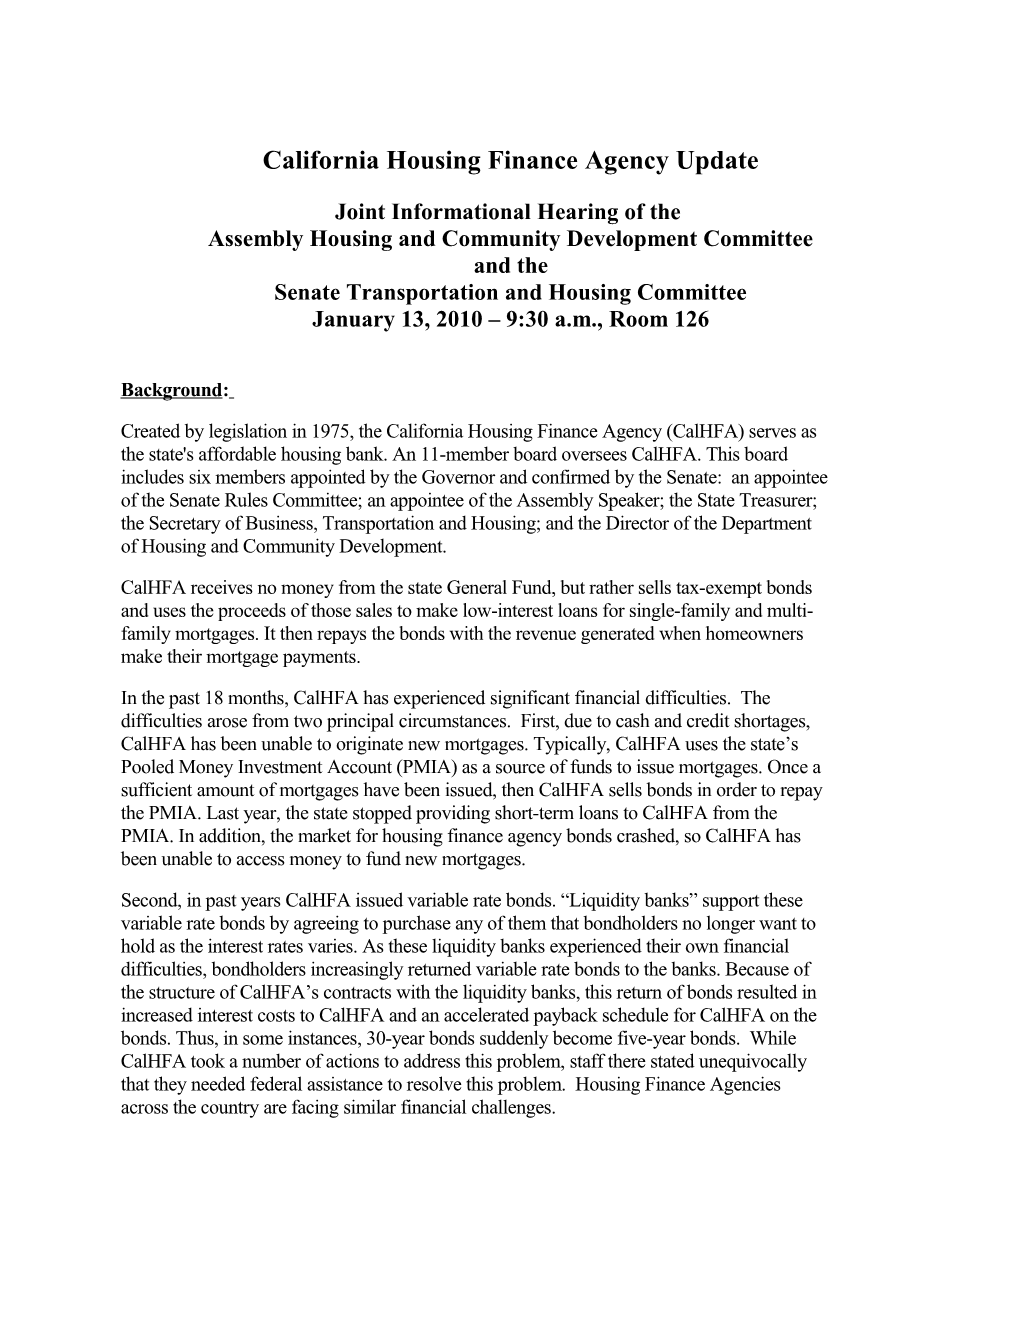 Background for California Housing Finance Agency Presentation